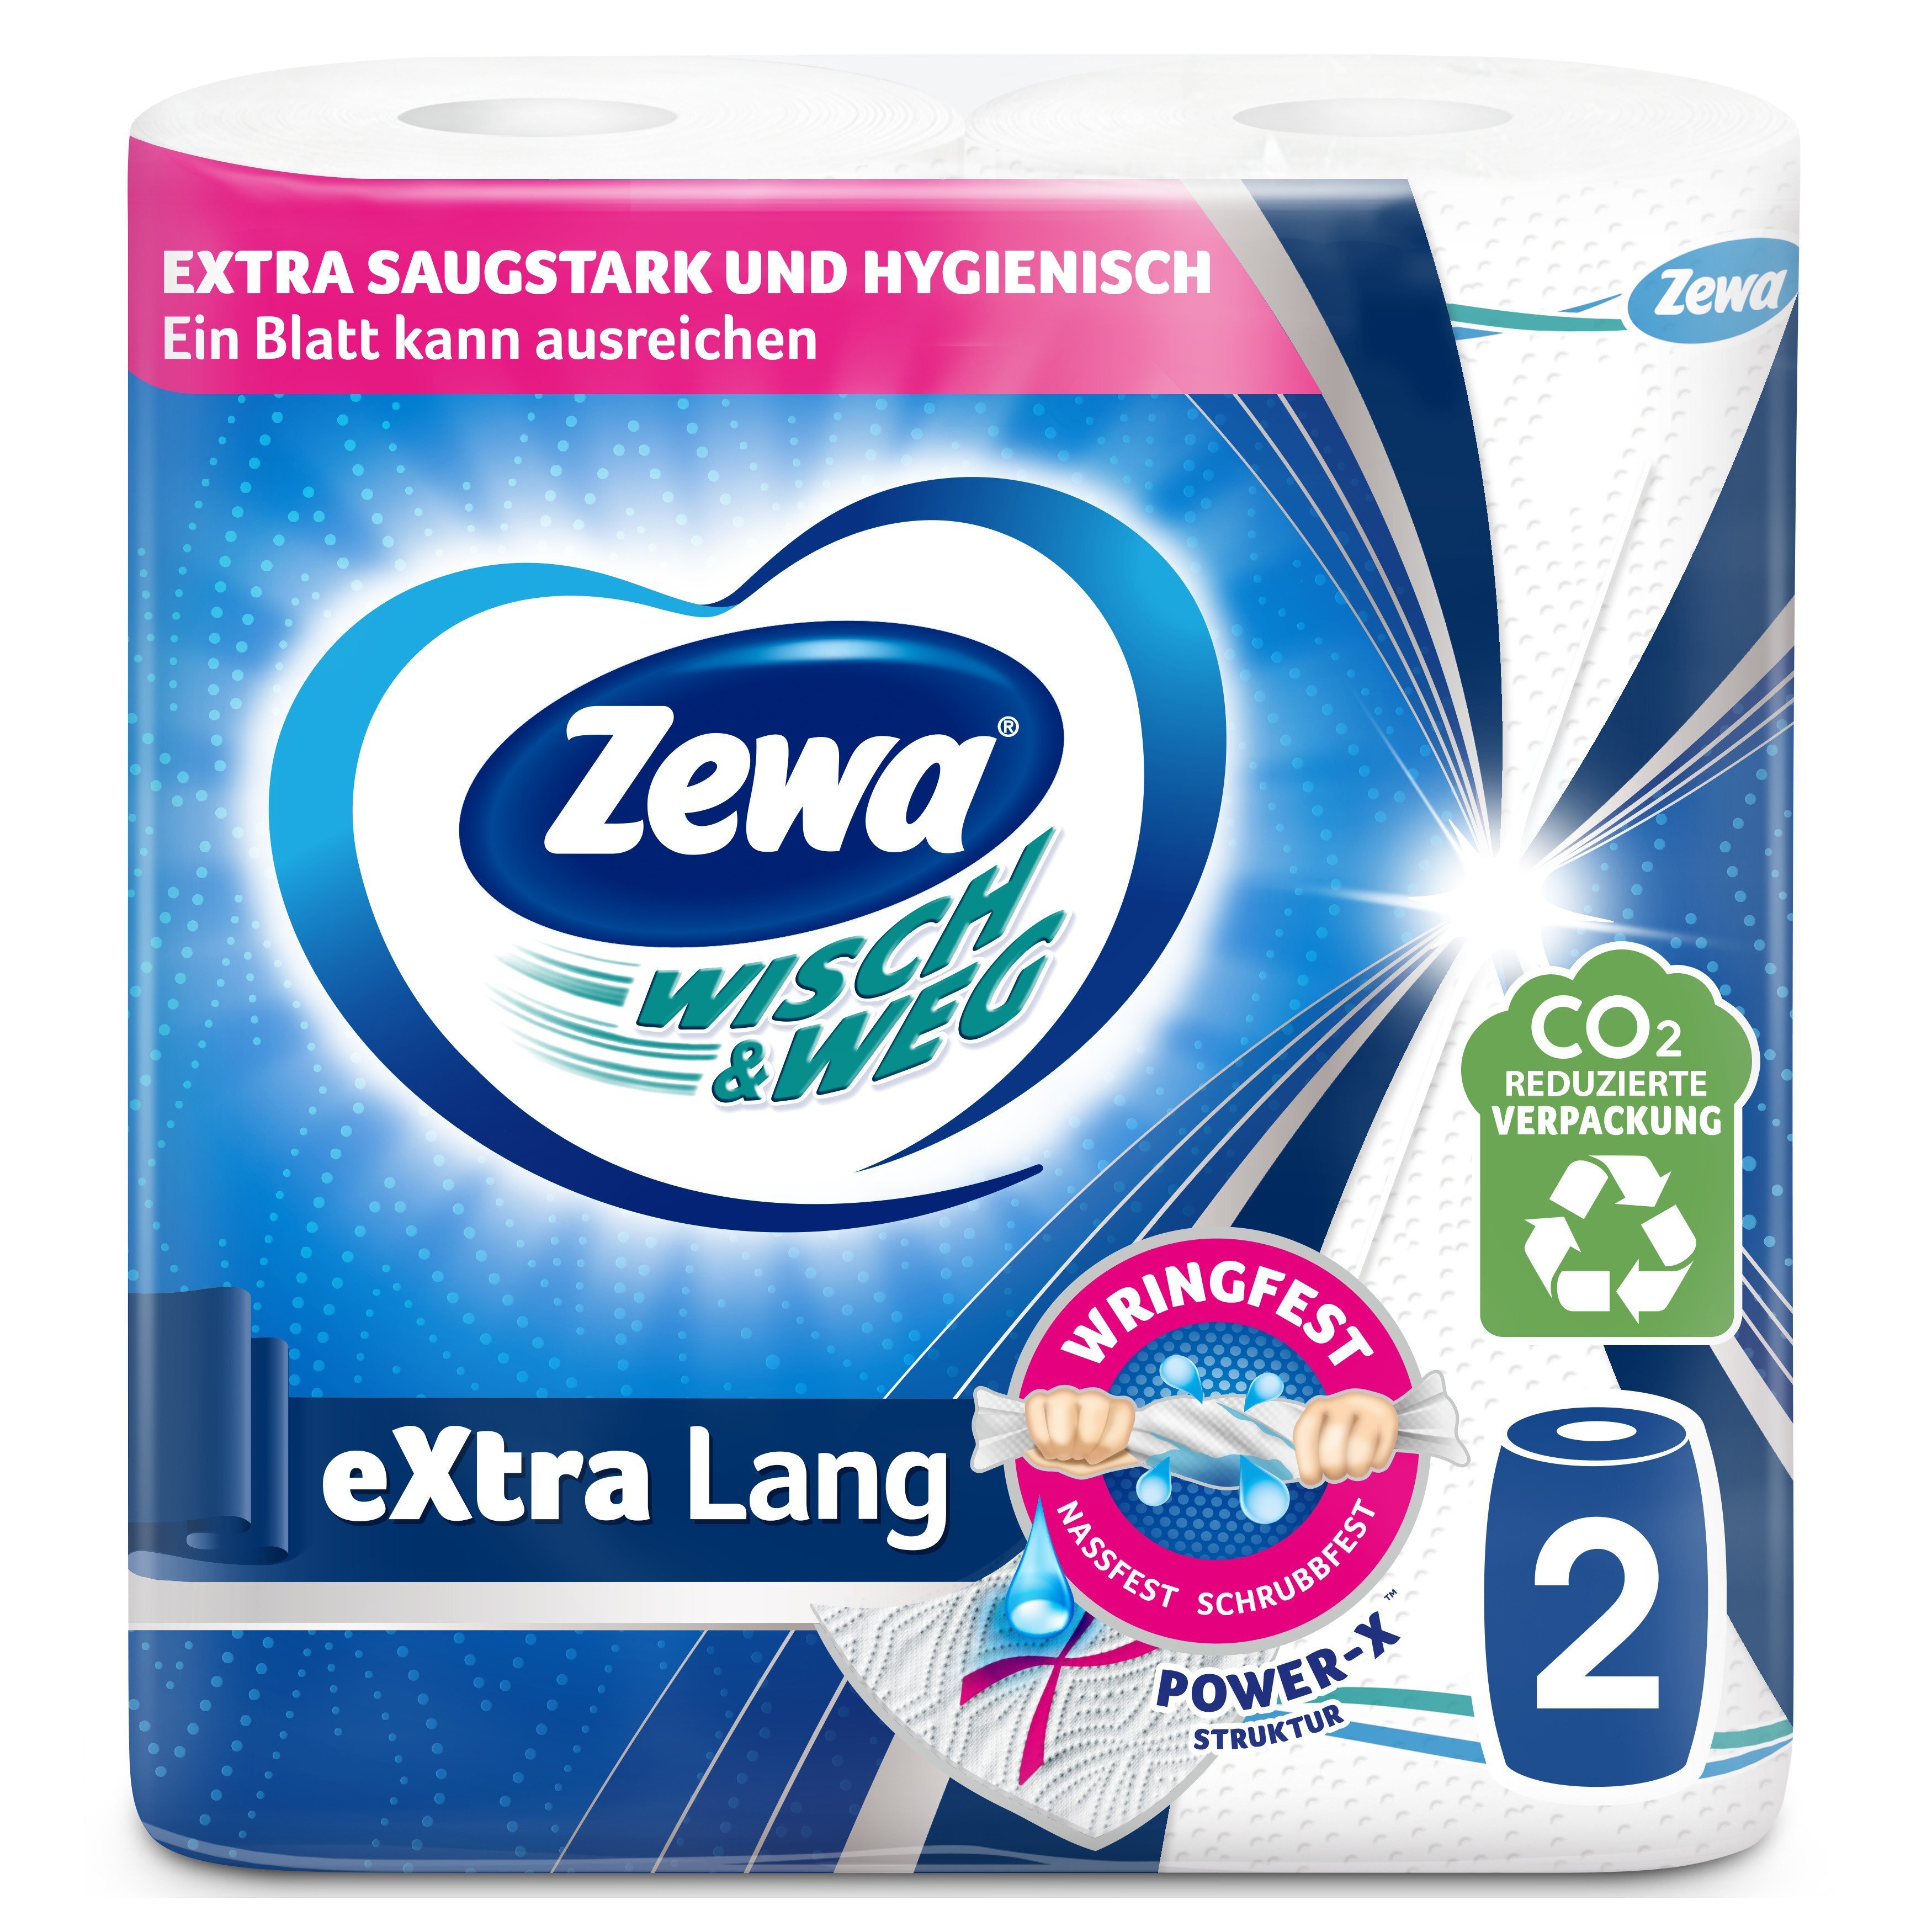 Кухонные полотенца Zewa Wisch&Weg 2 фото 1